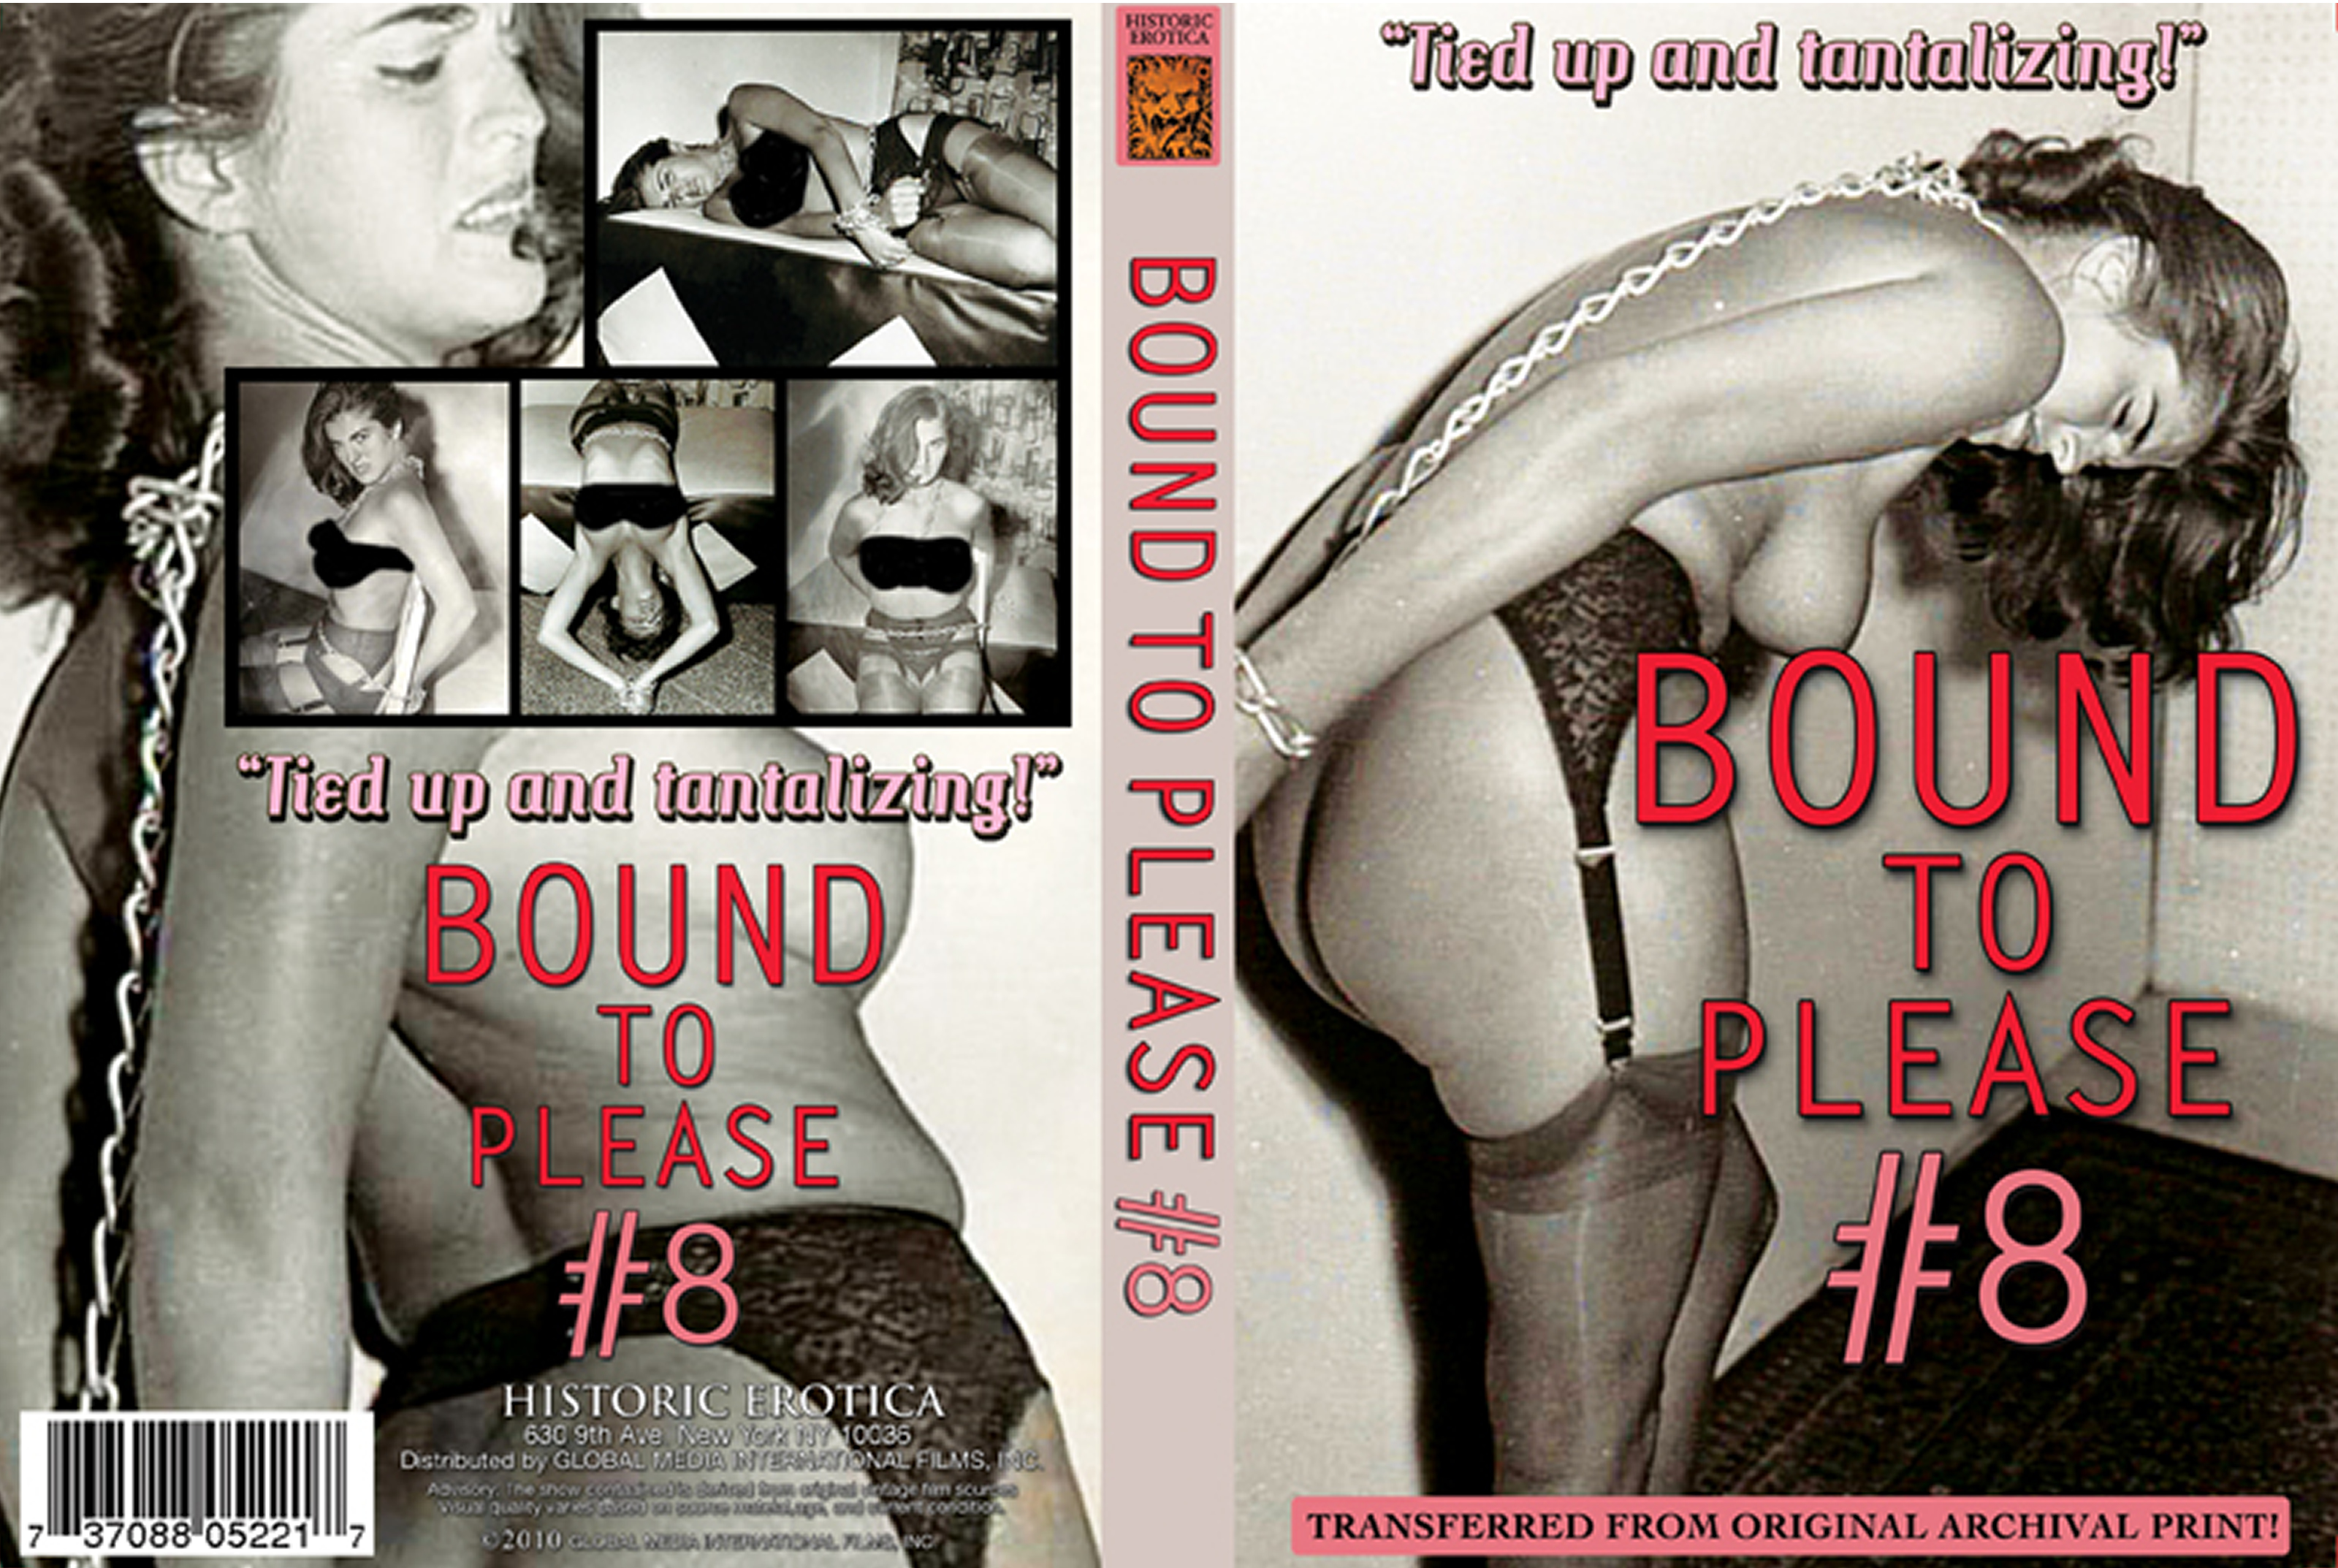 Bound to Please #8